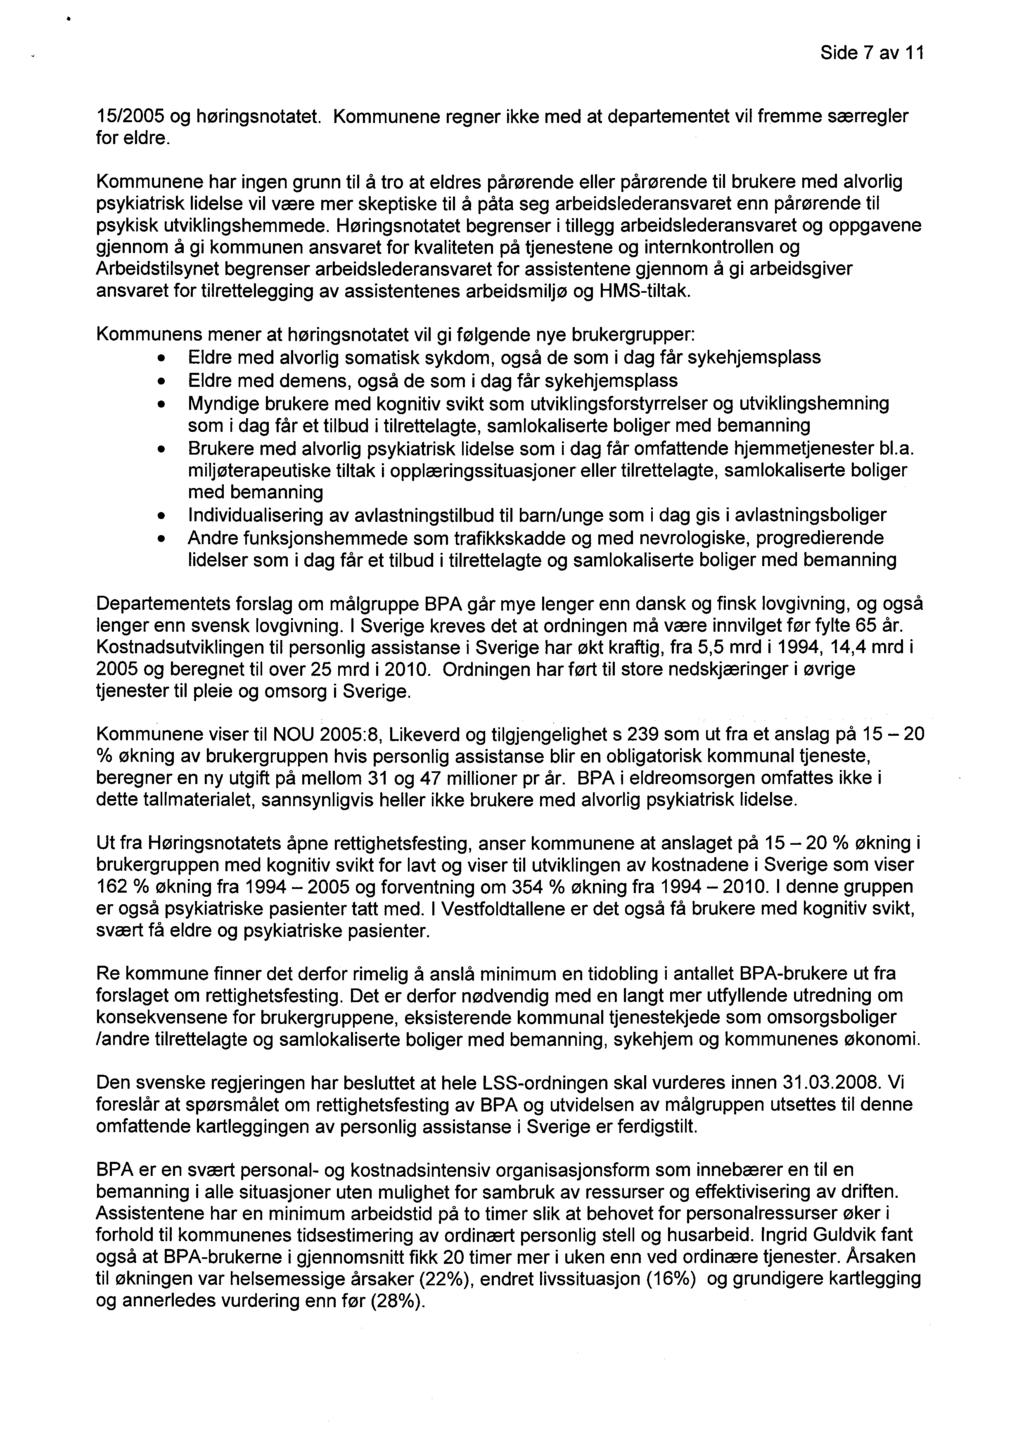 Side 7 av 11 15/2005 og høringsnotatet. Kommunene regner ikke med at departementet vil fremme særregler for eldre.